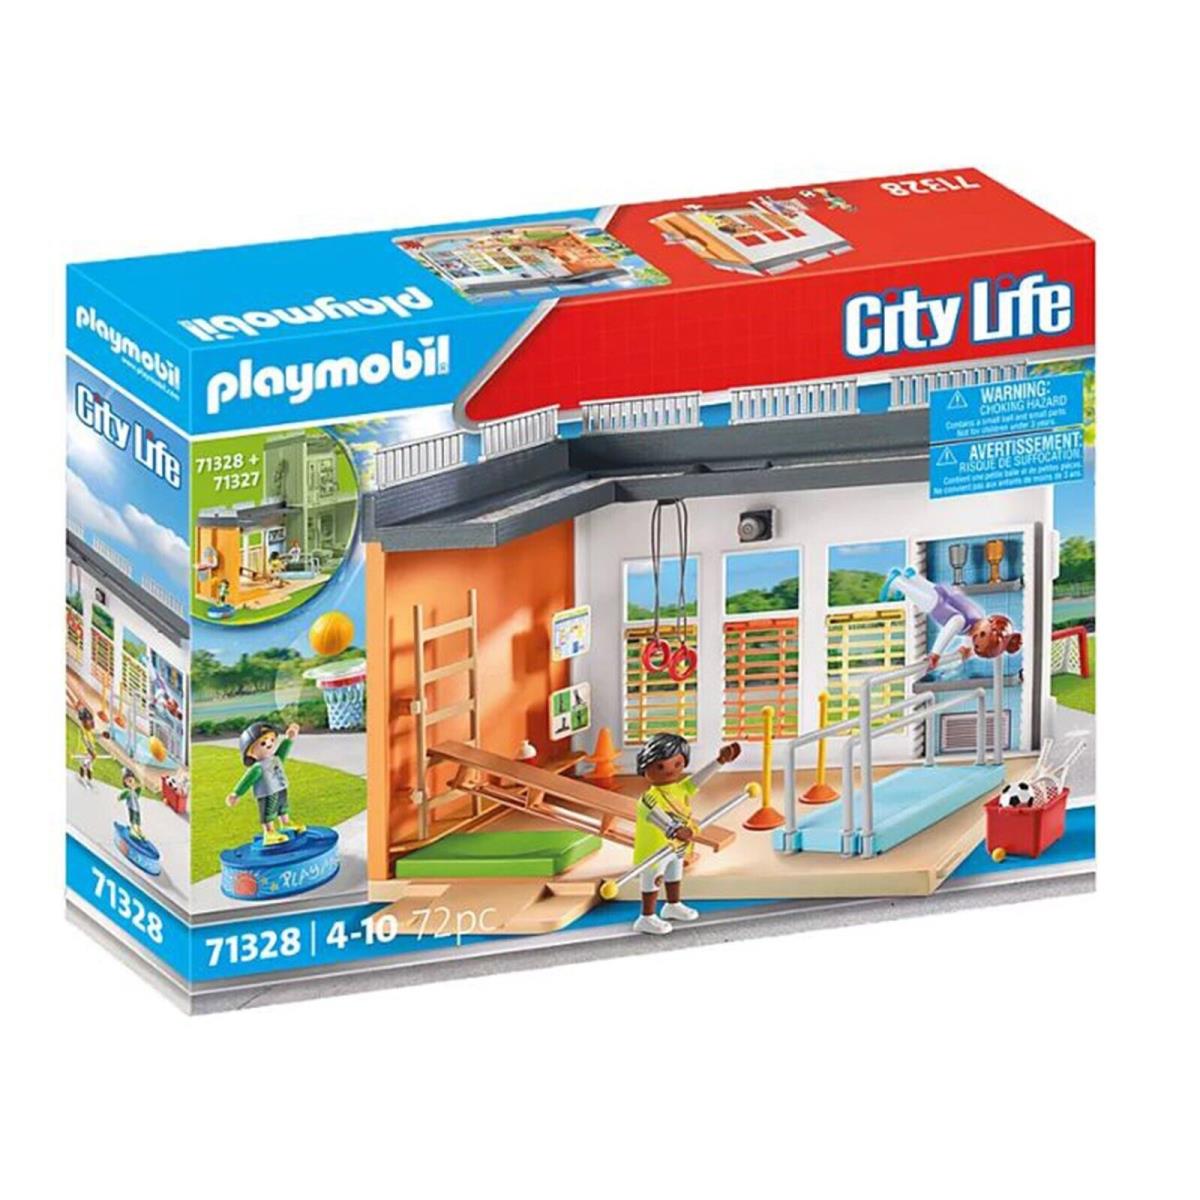 Playmobil City Life Gym Extension Building Set